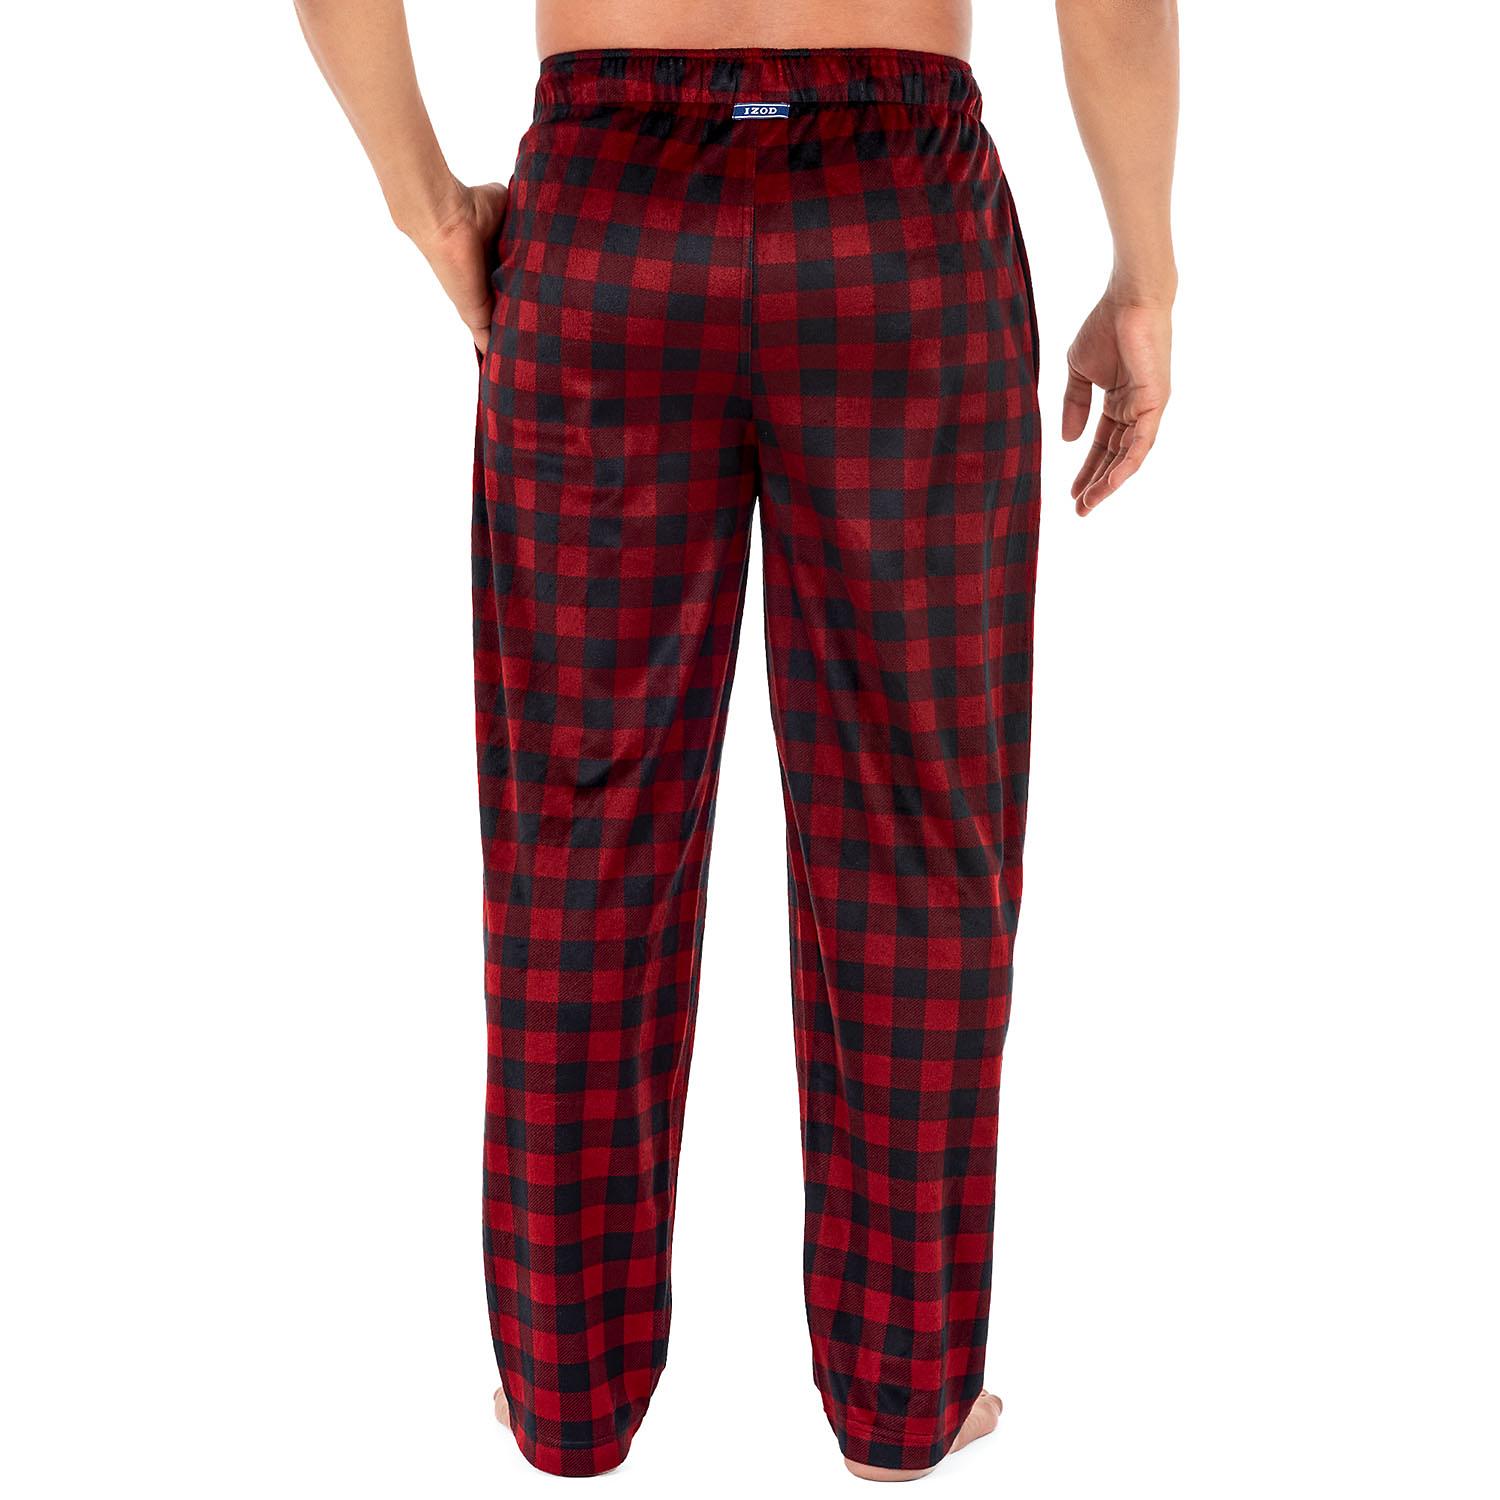 Izod Men's Micro Fleece Pajama Pant in Red, Size Medium - image 2 of 2